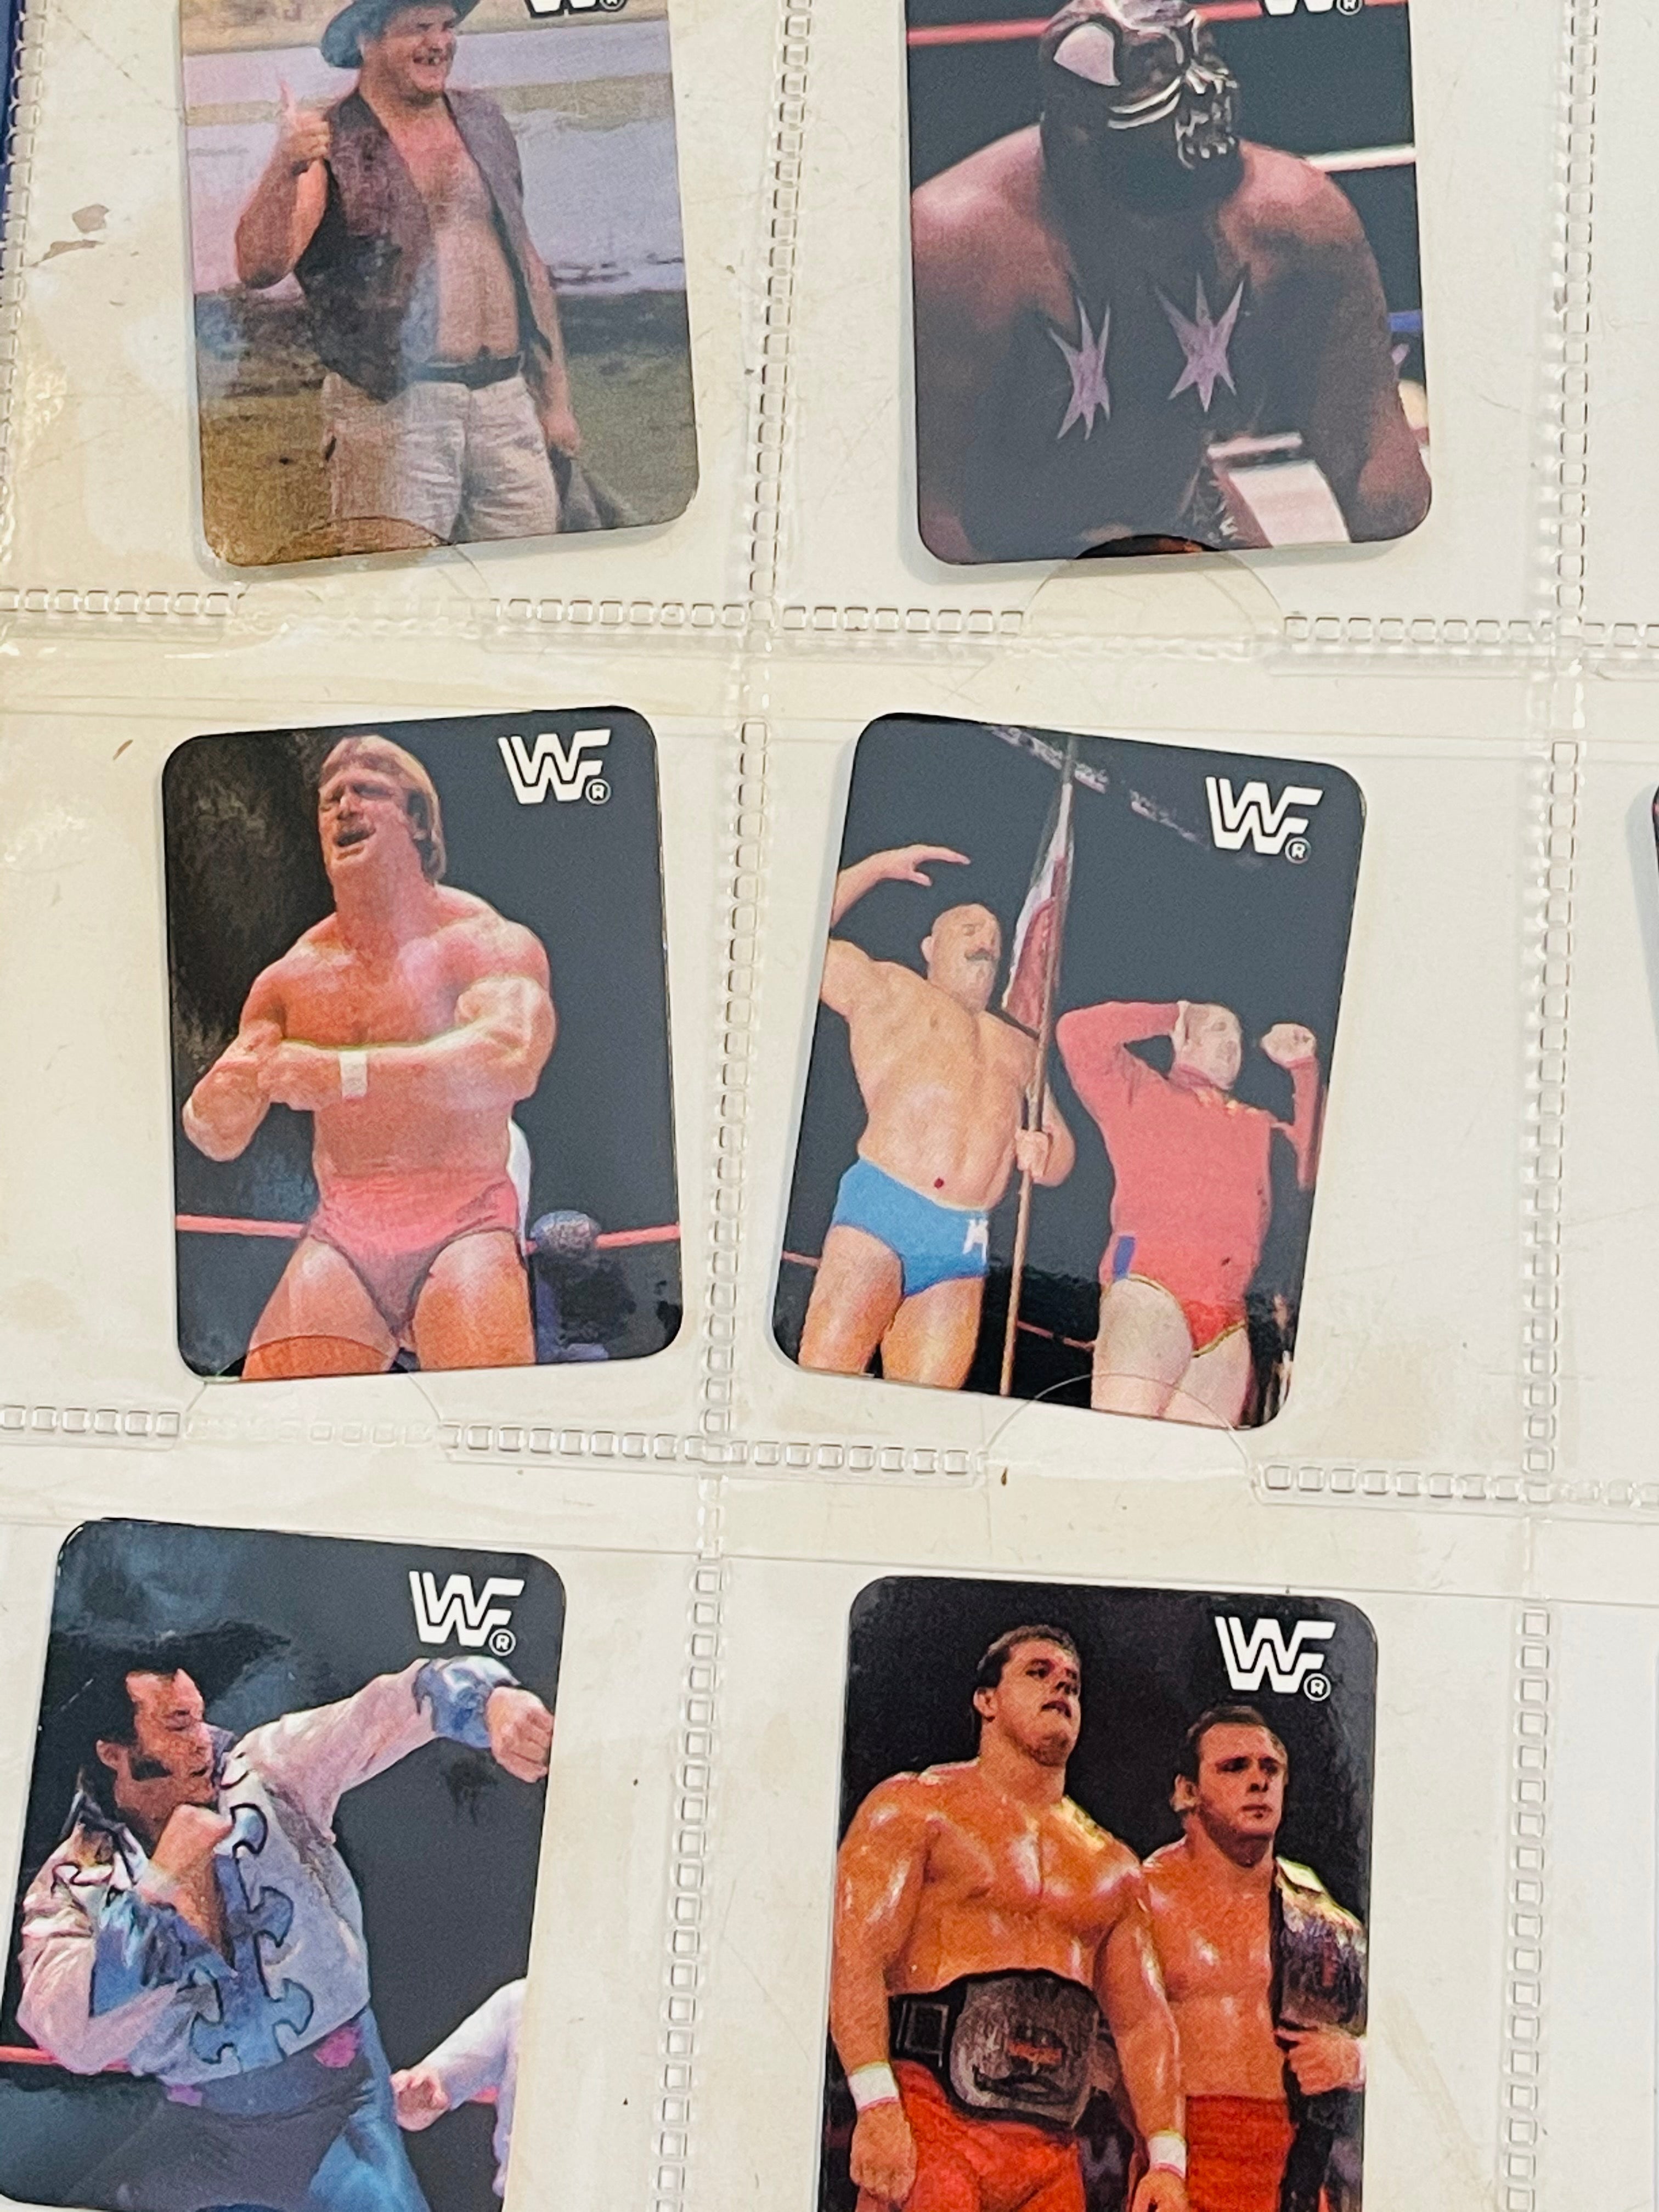 Wrestling Wreslemania Hostess Chips rare complete cards set 1987